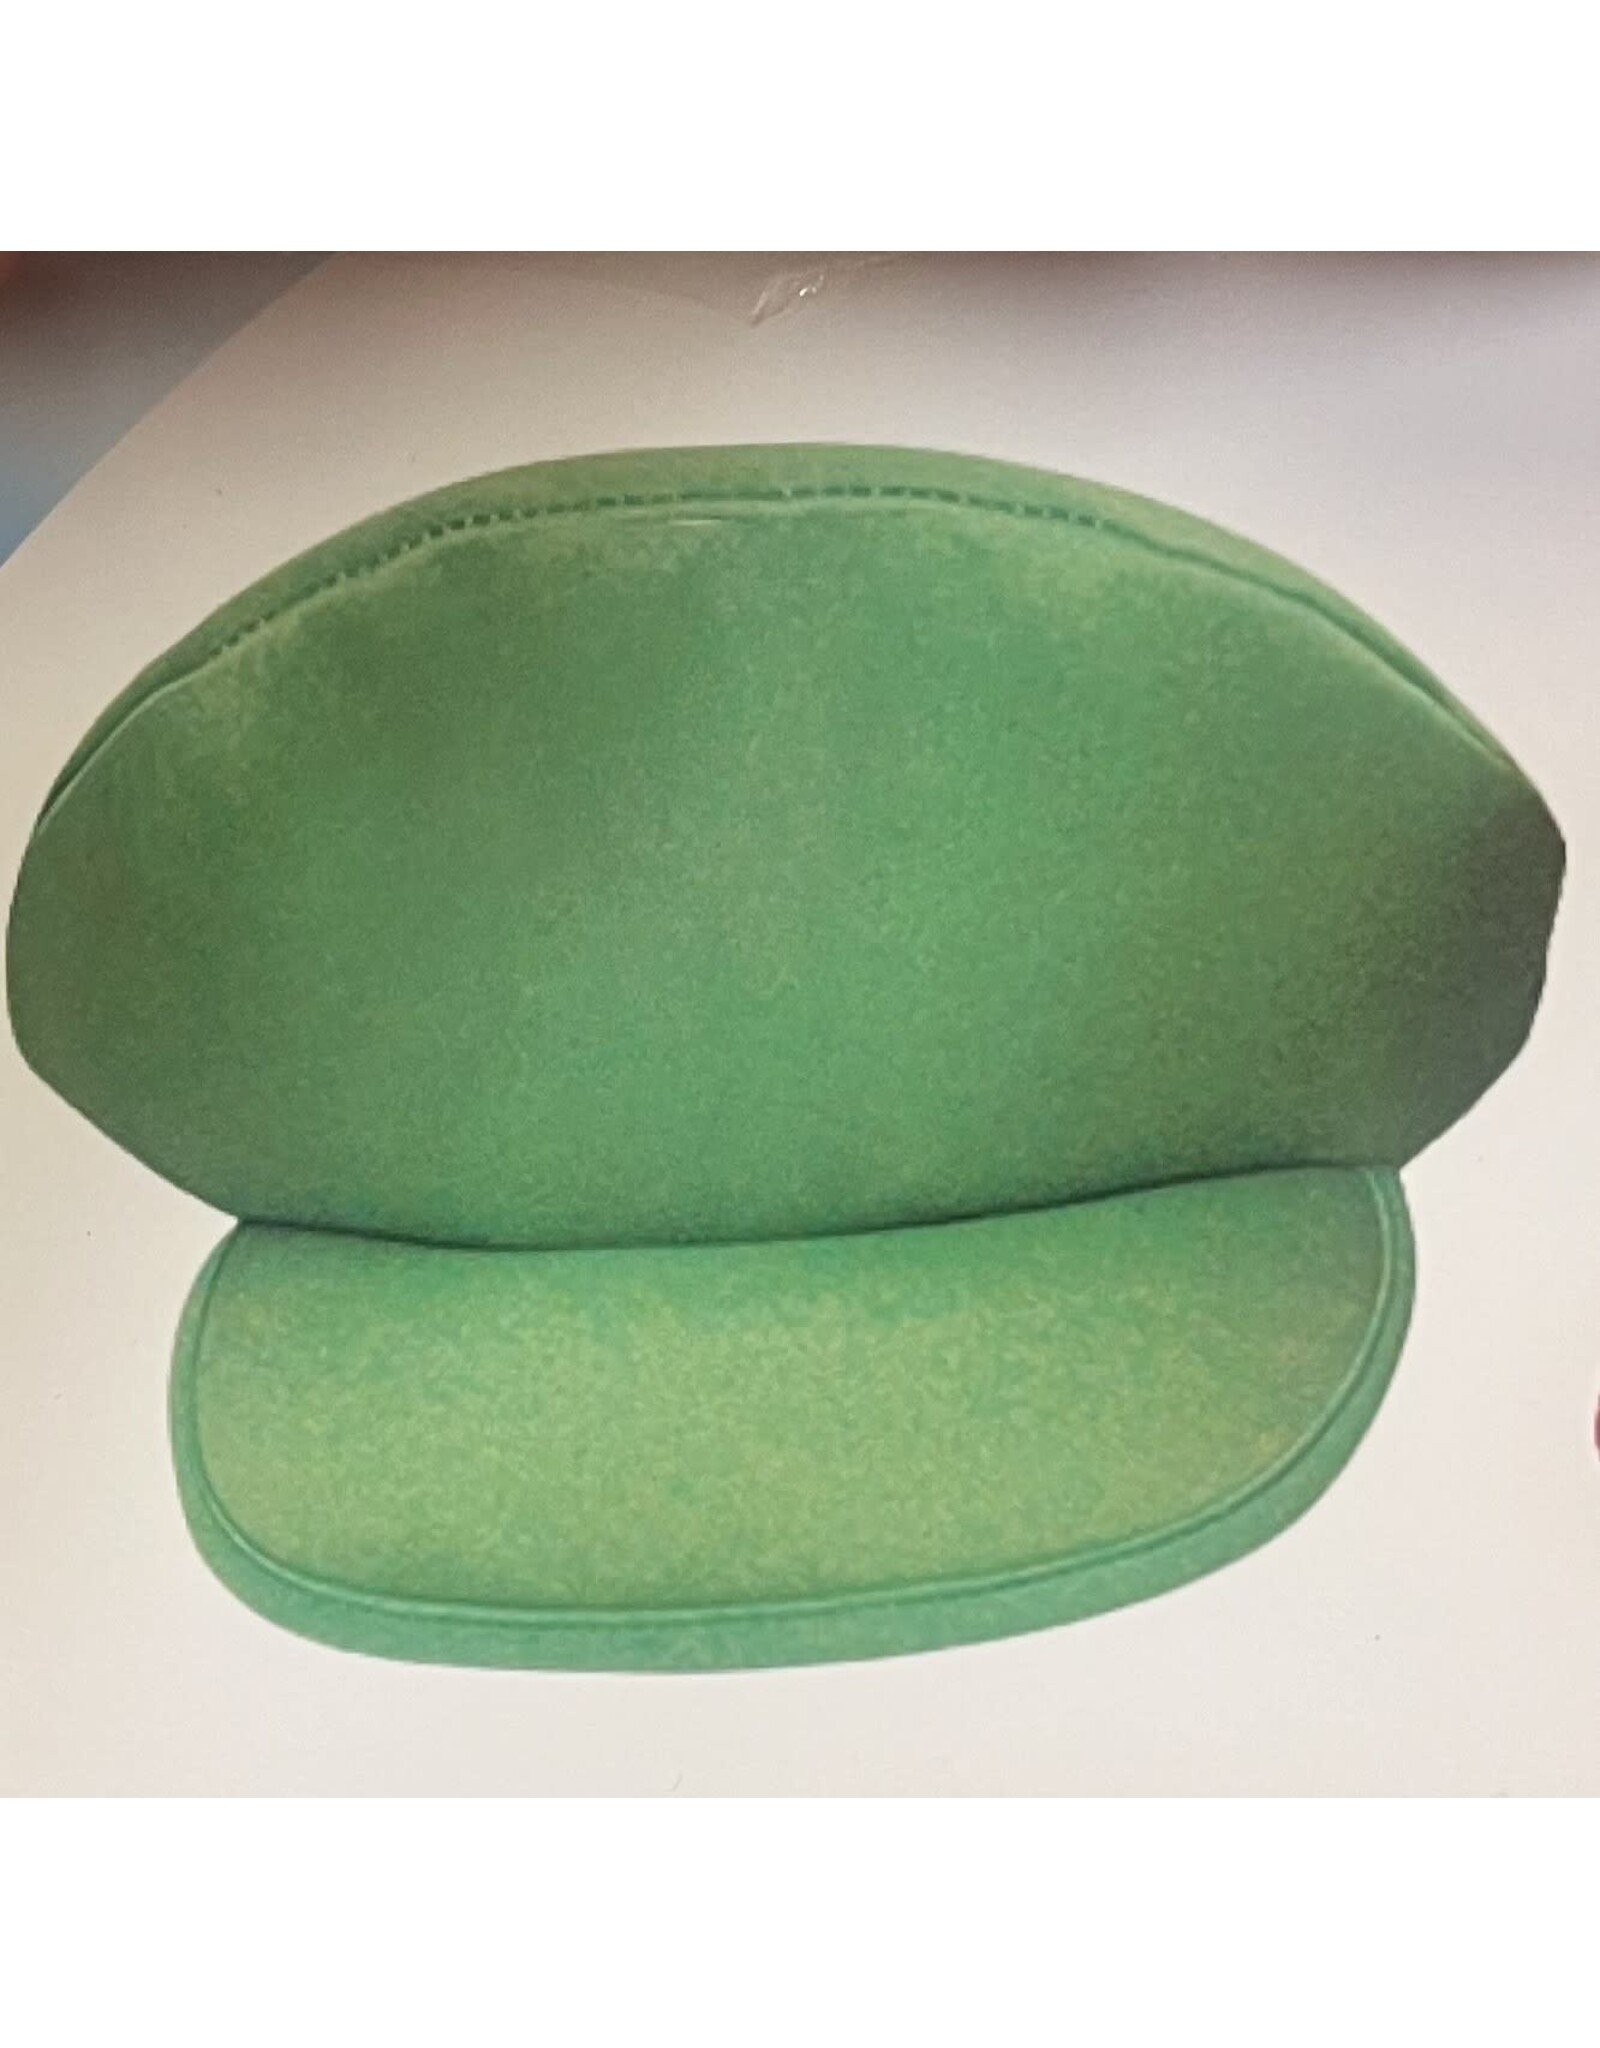 HM Smallwares Plumber's Hat Green